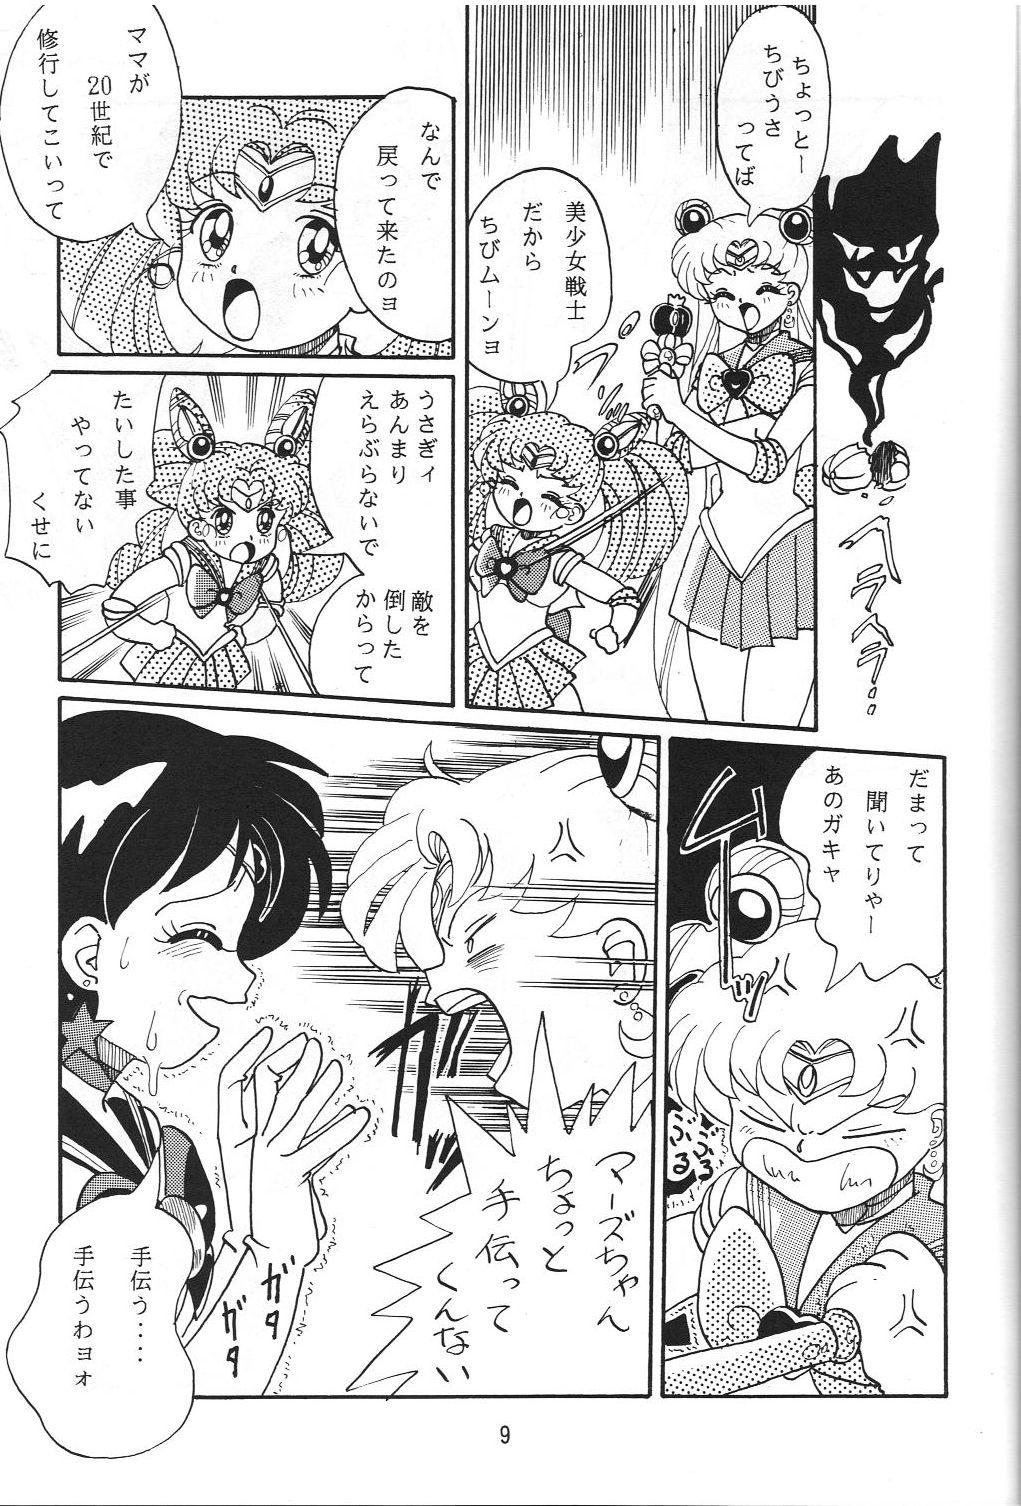 Busty Jiyuu Tamashii - Sailor moon Ah my goddess Tenchi muyo Stepsister - Page 8